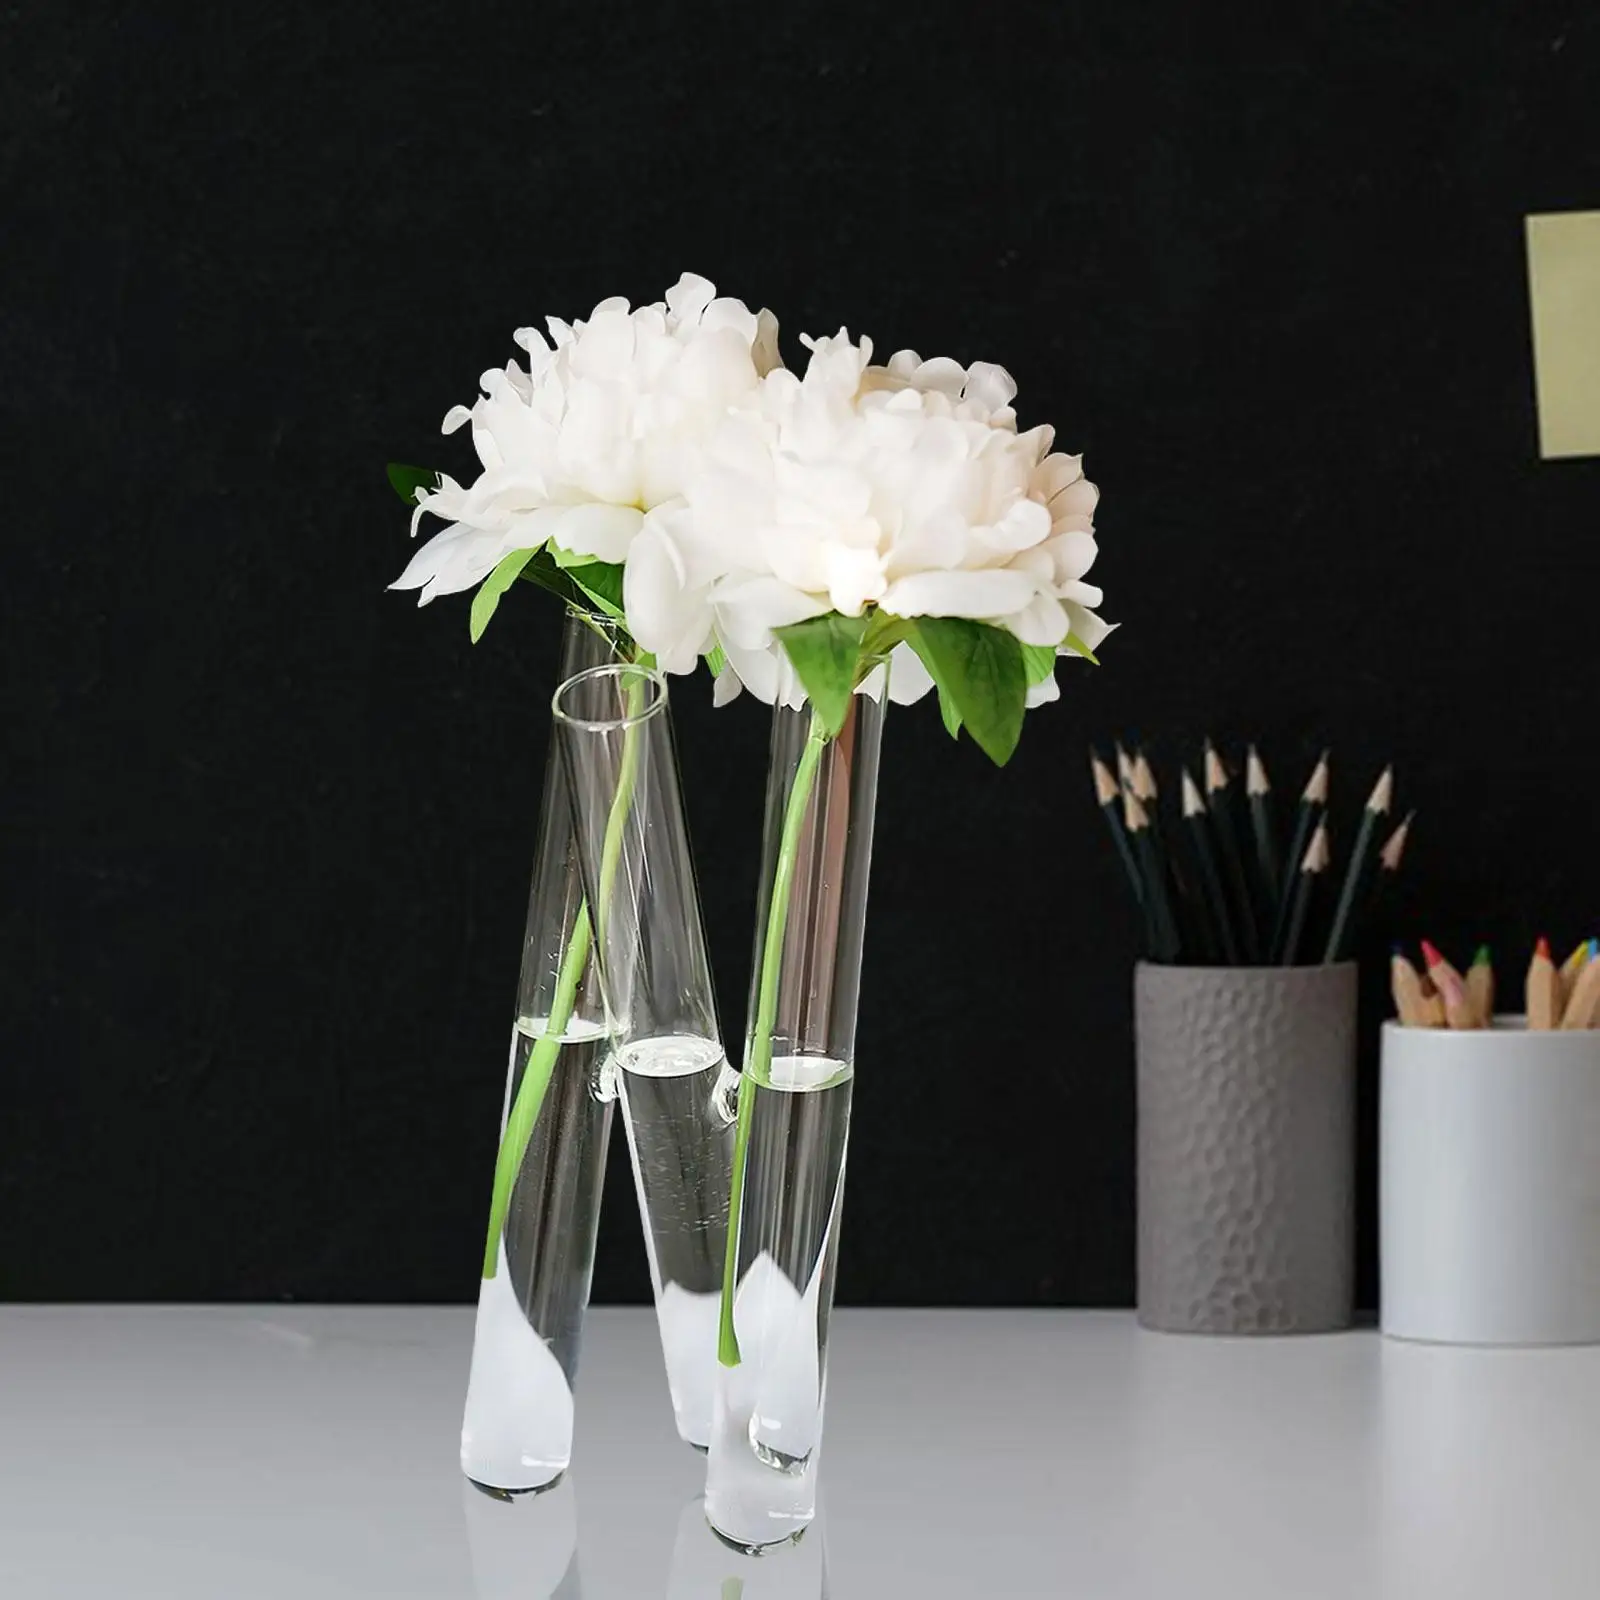 Test Tube Vase with 3 Test Tubes Propagation Decoration Hydroponic Plant Holder for Interior Living Room Desktop Kitchen Wedding